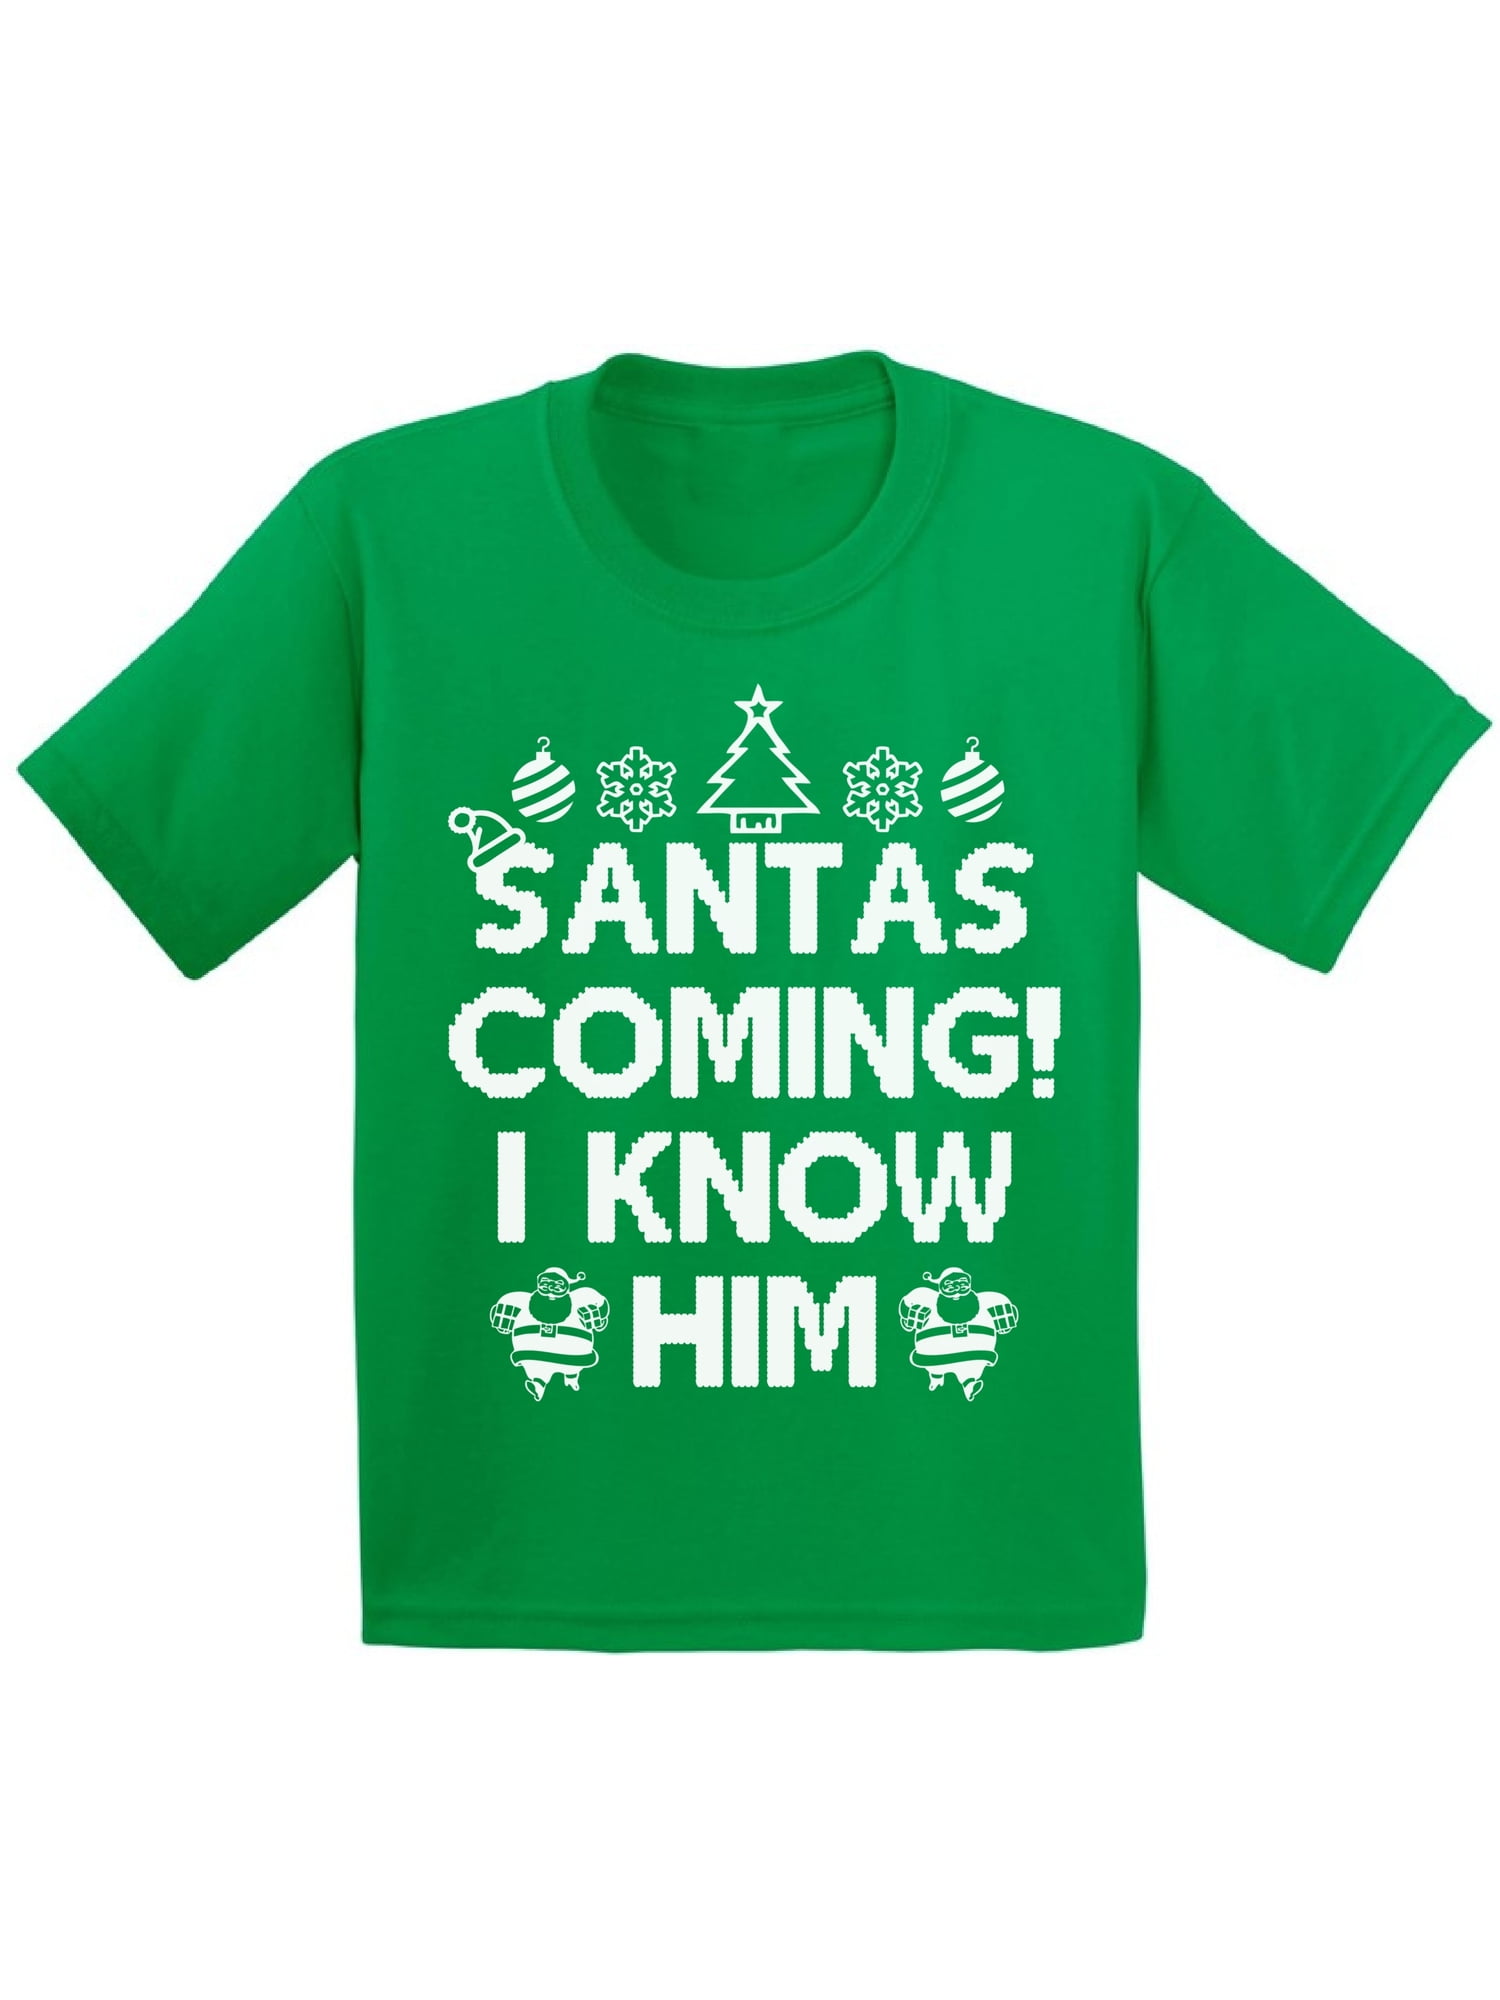 Santa Claus Graphic Tee Kids Believe Shirt Holiday Youth Short Sleeve T-Shirt S-XL Boys Girls Christmas Tshirt